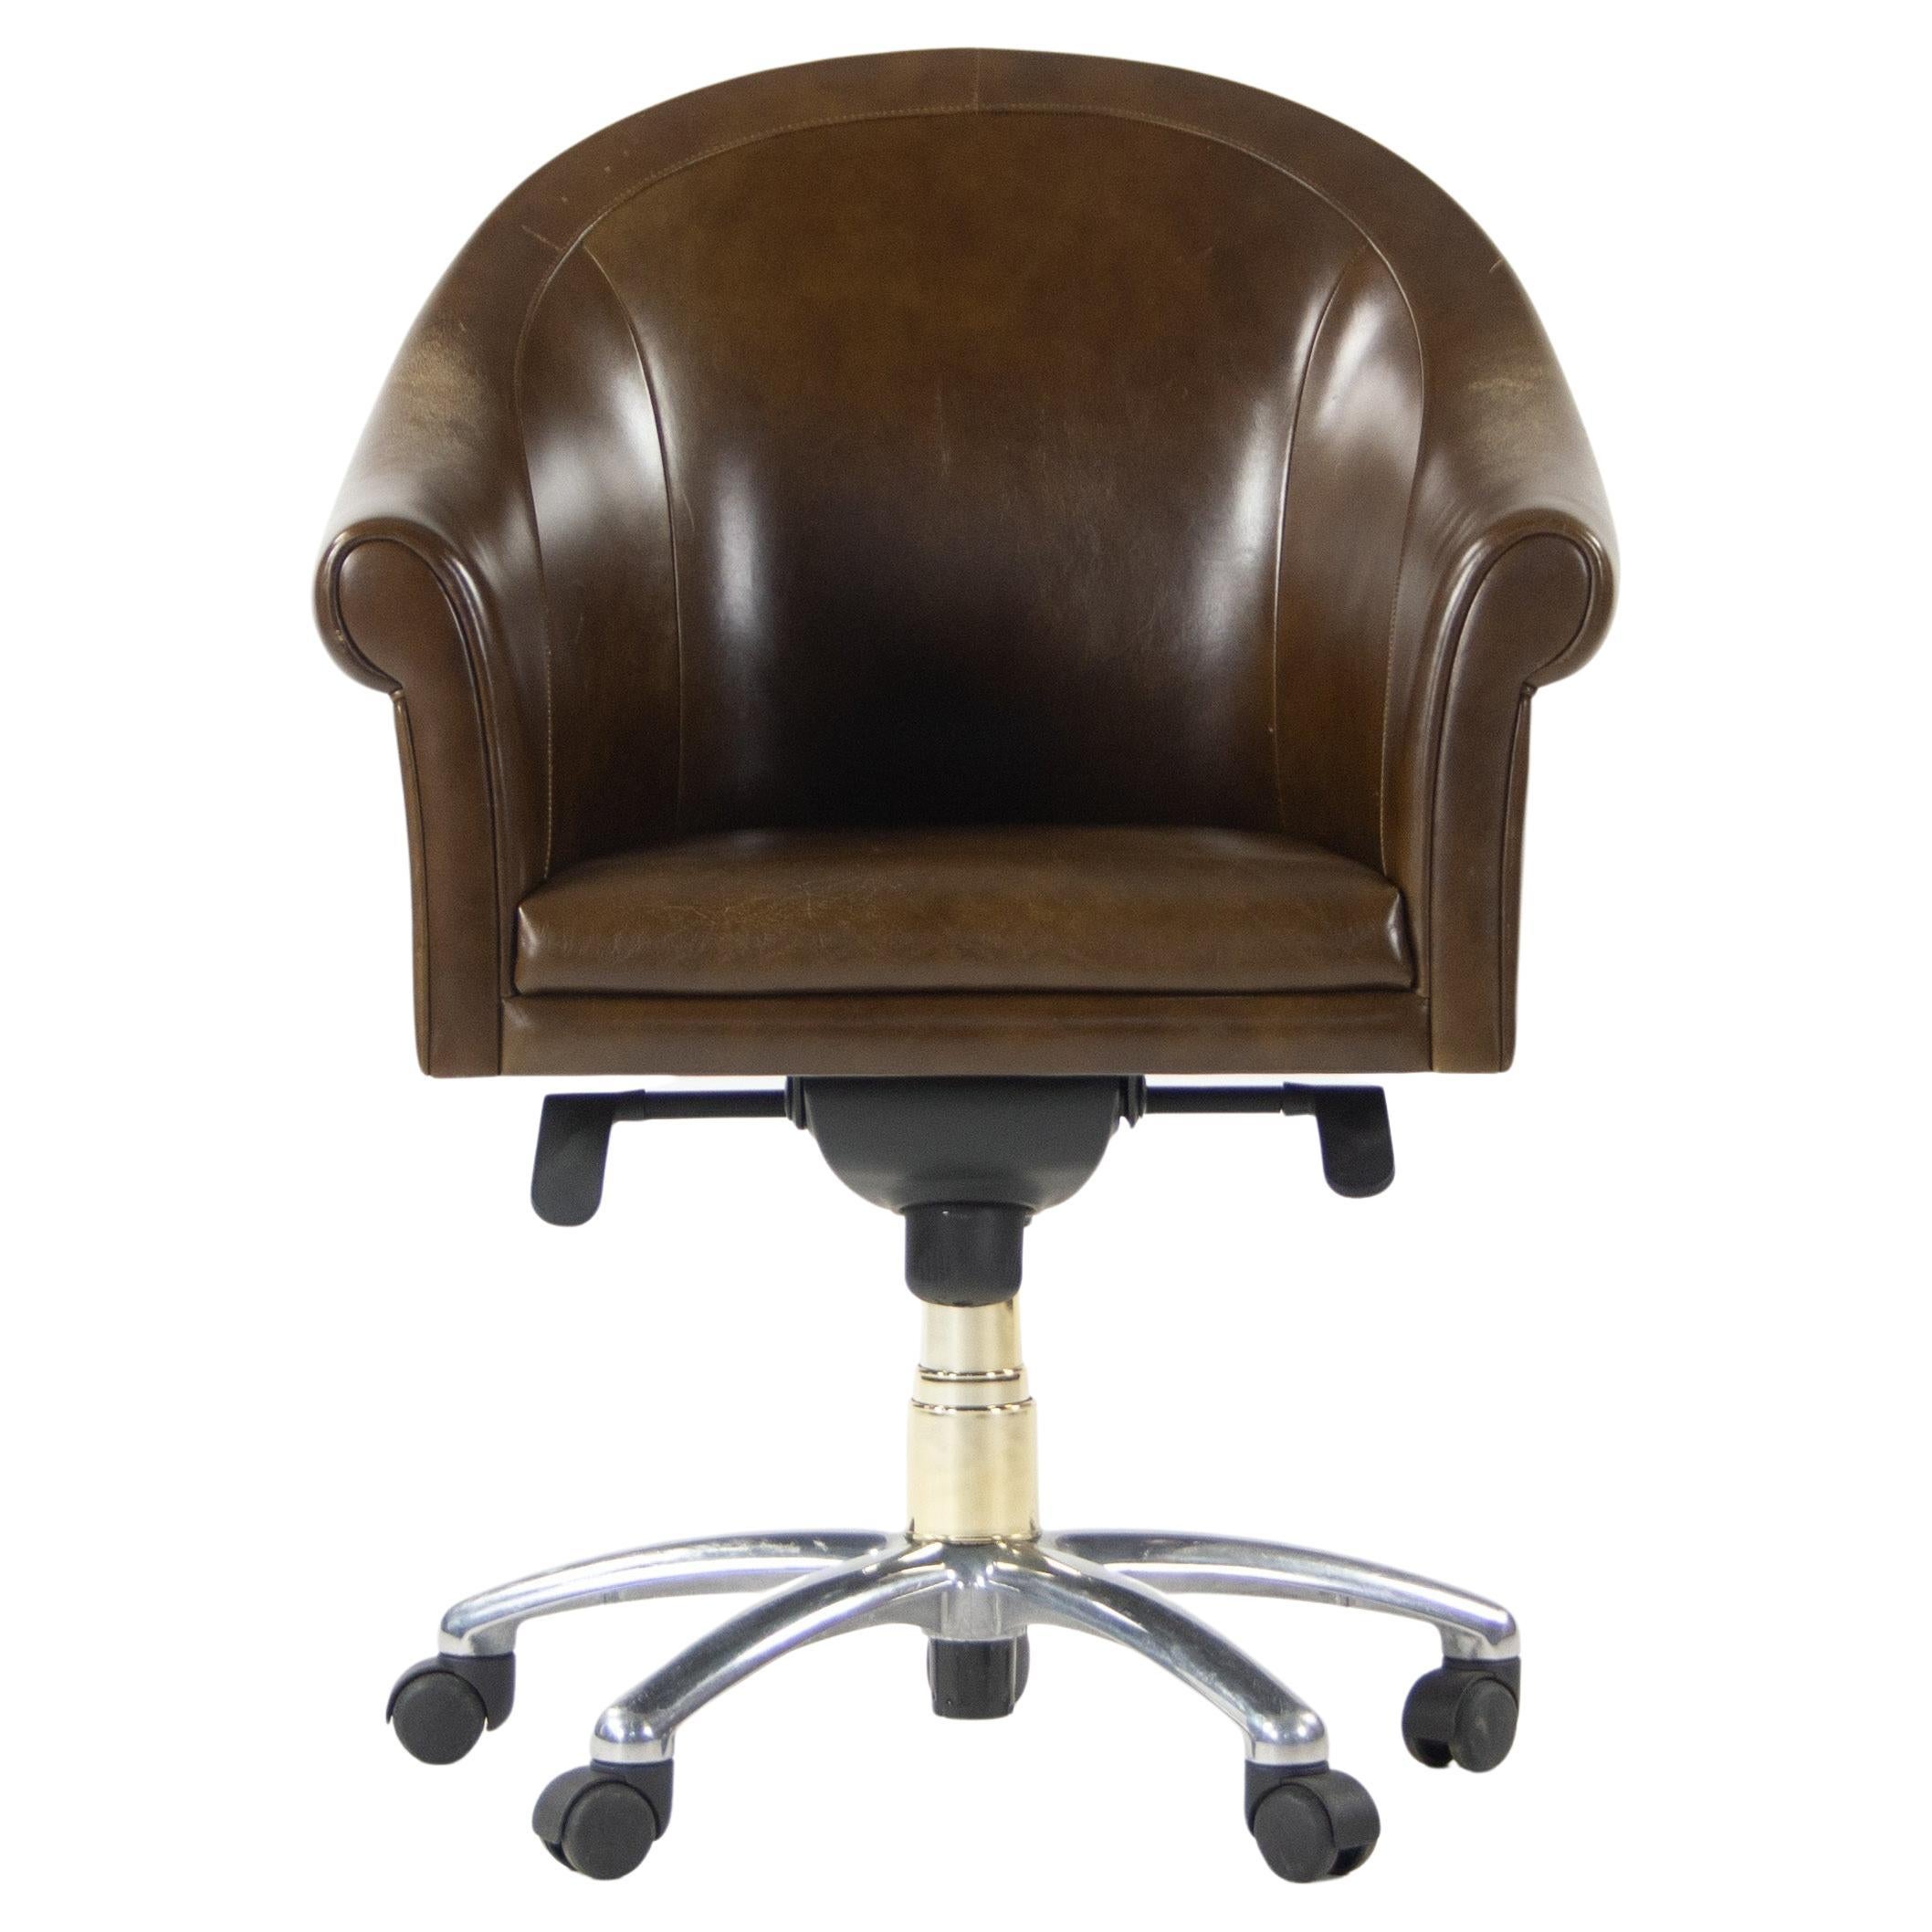 Poltrona Frau Brown Leather Luca Scacchetti Sinan Office Desk Chair For Sale